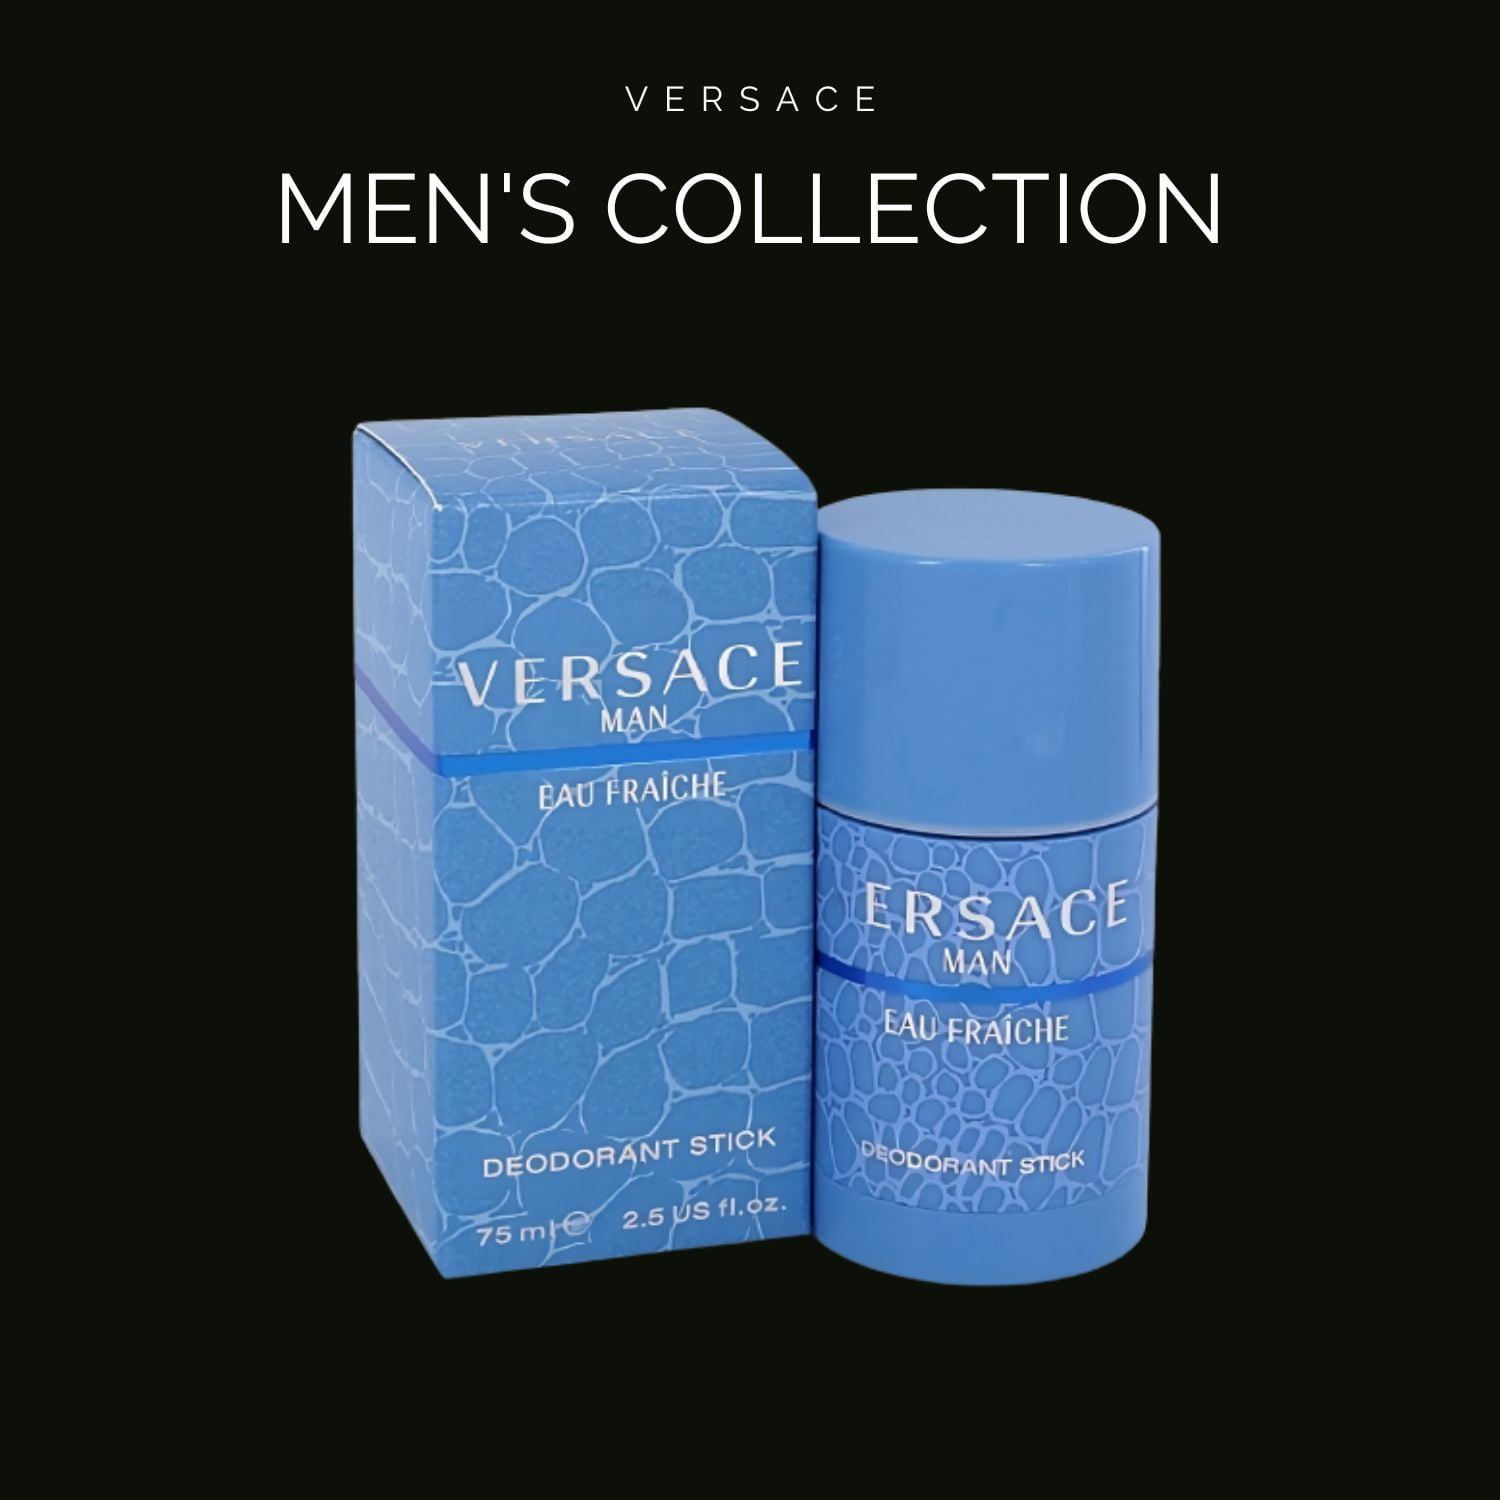 Kritik Robust I fare Versace Man Eau Fraiche Deodorant Stick/2.5 oz. - Walmart.com